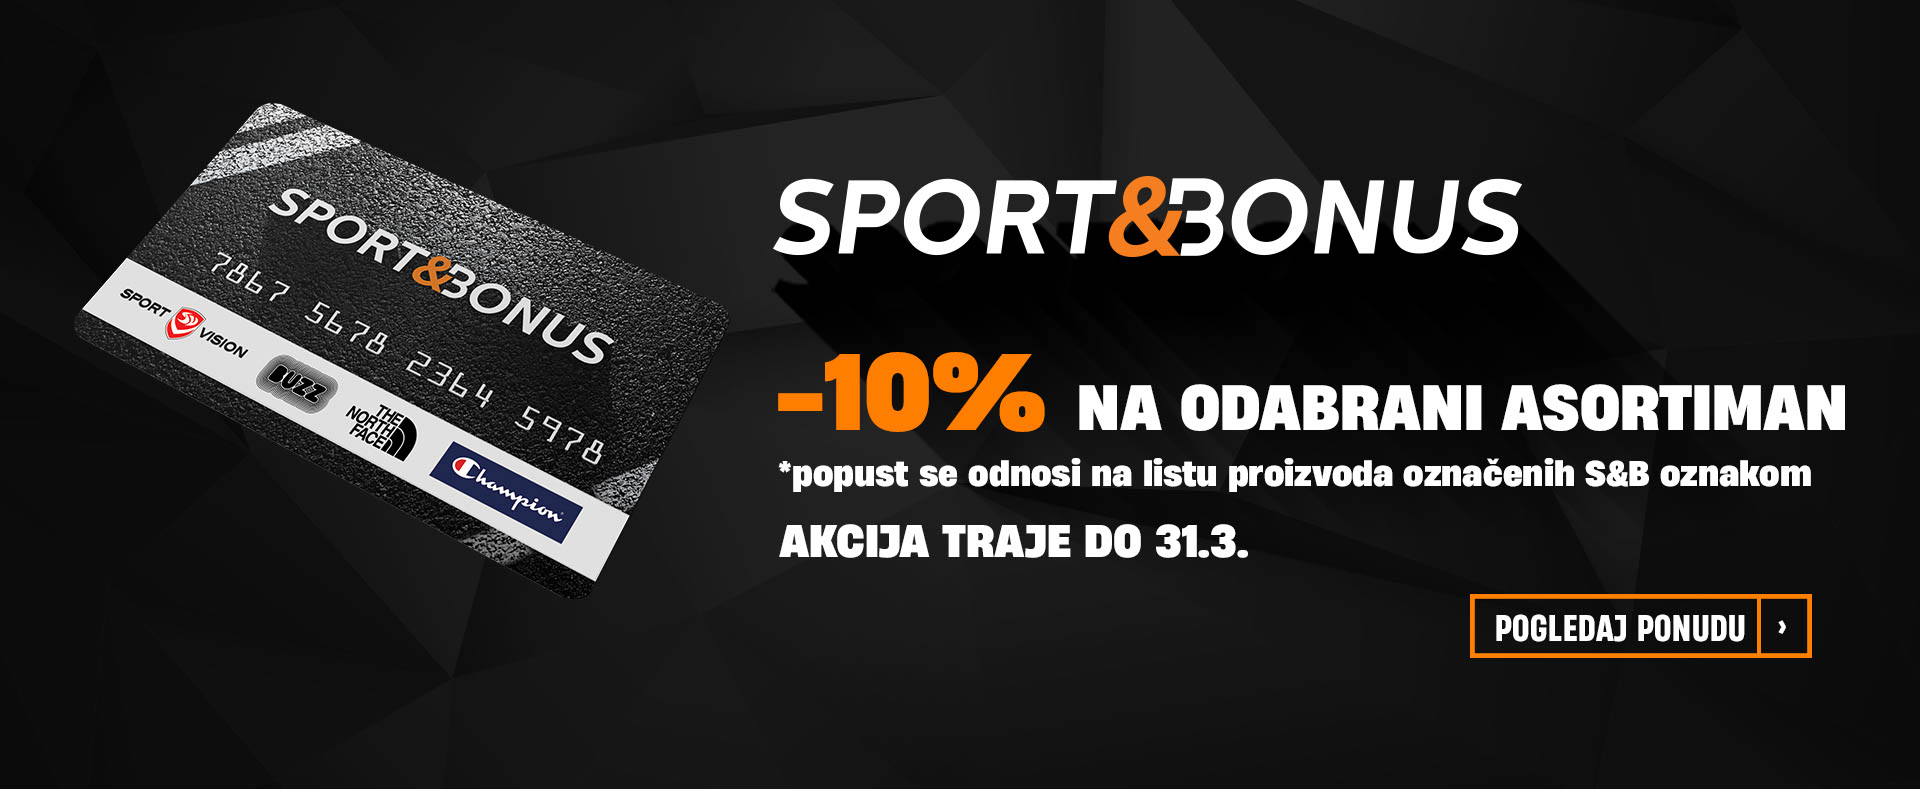 Sport&bonus 